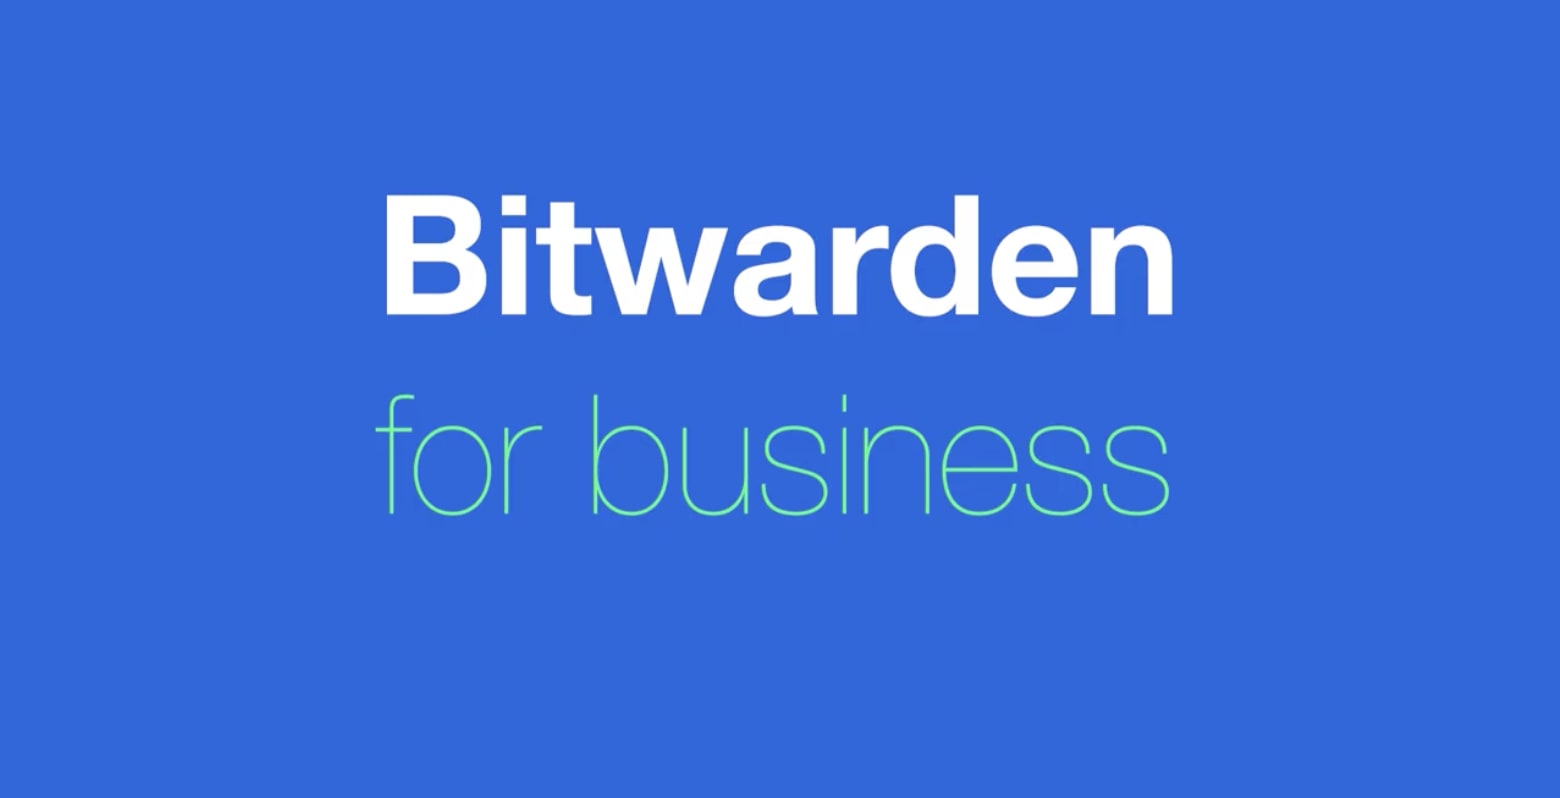 Bitwarden for business